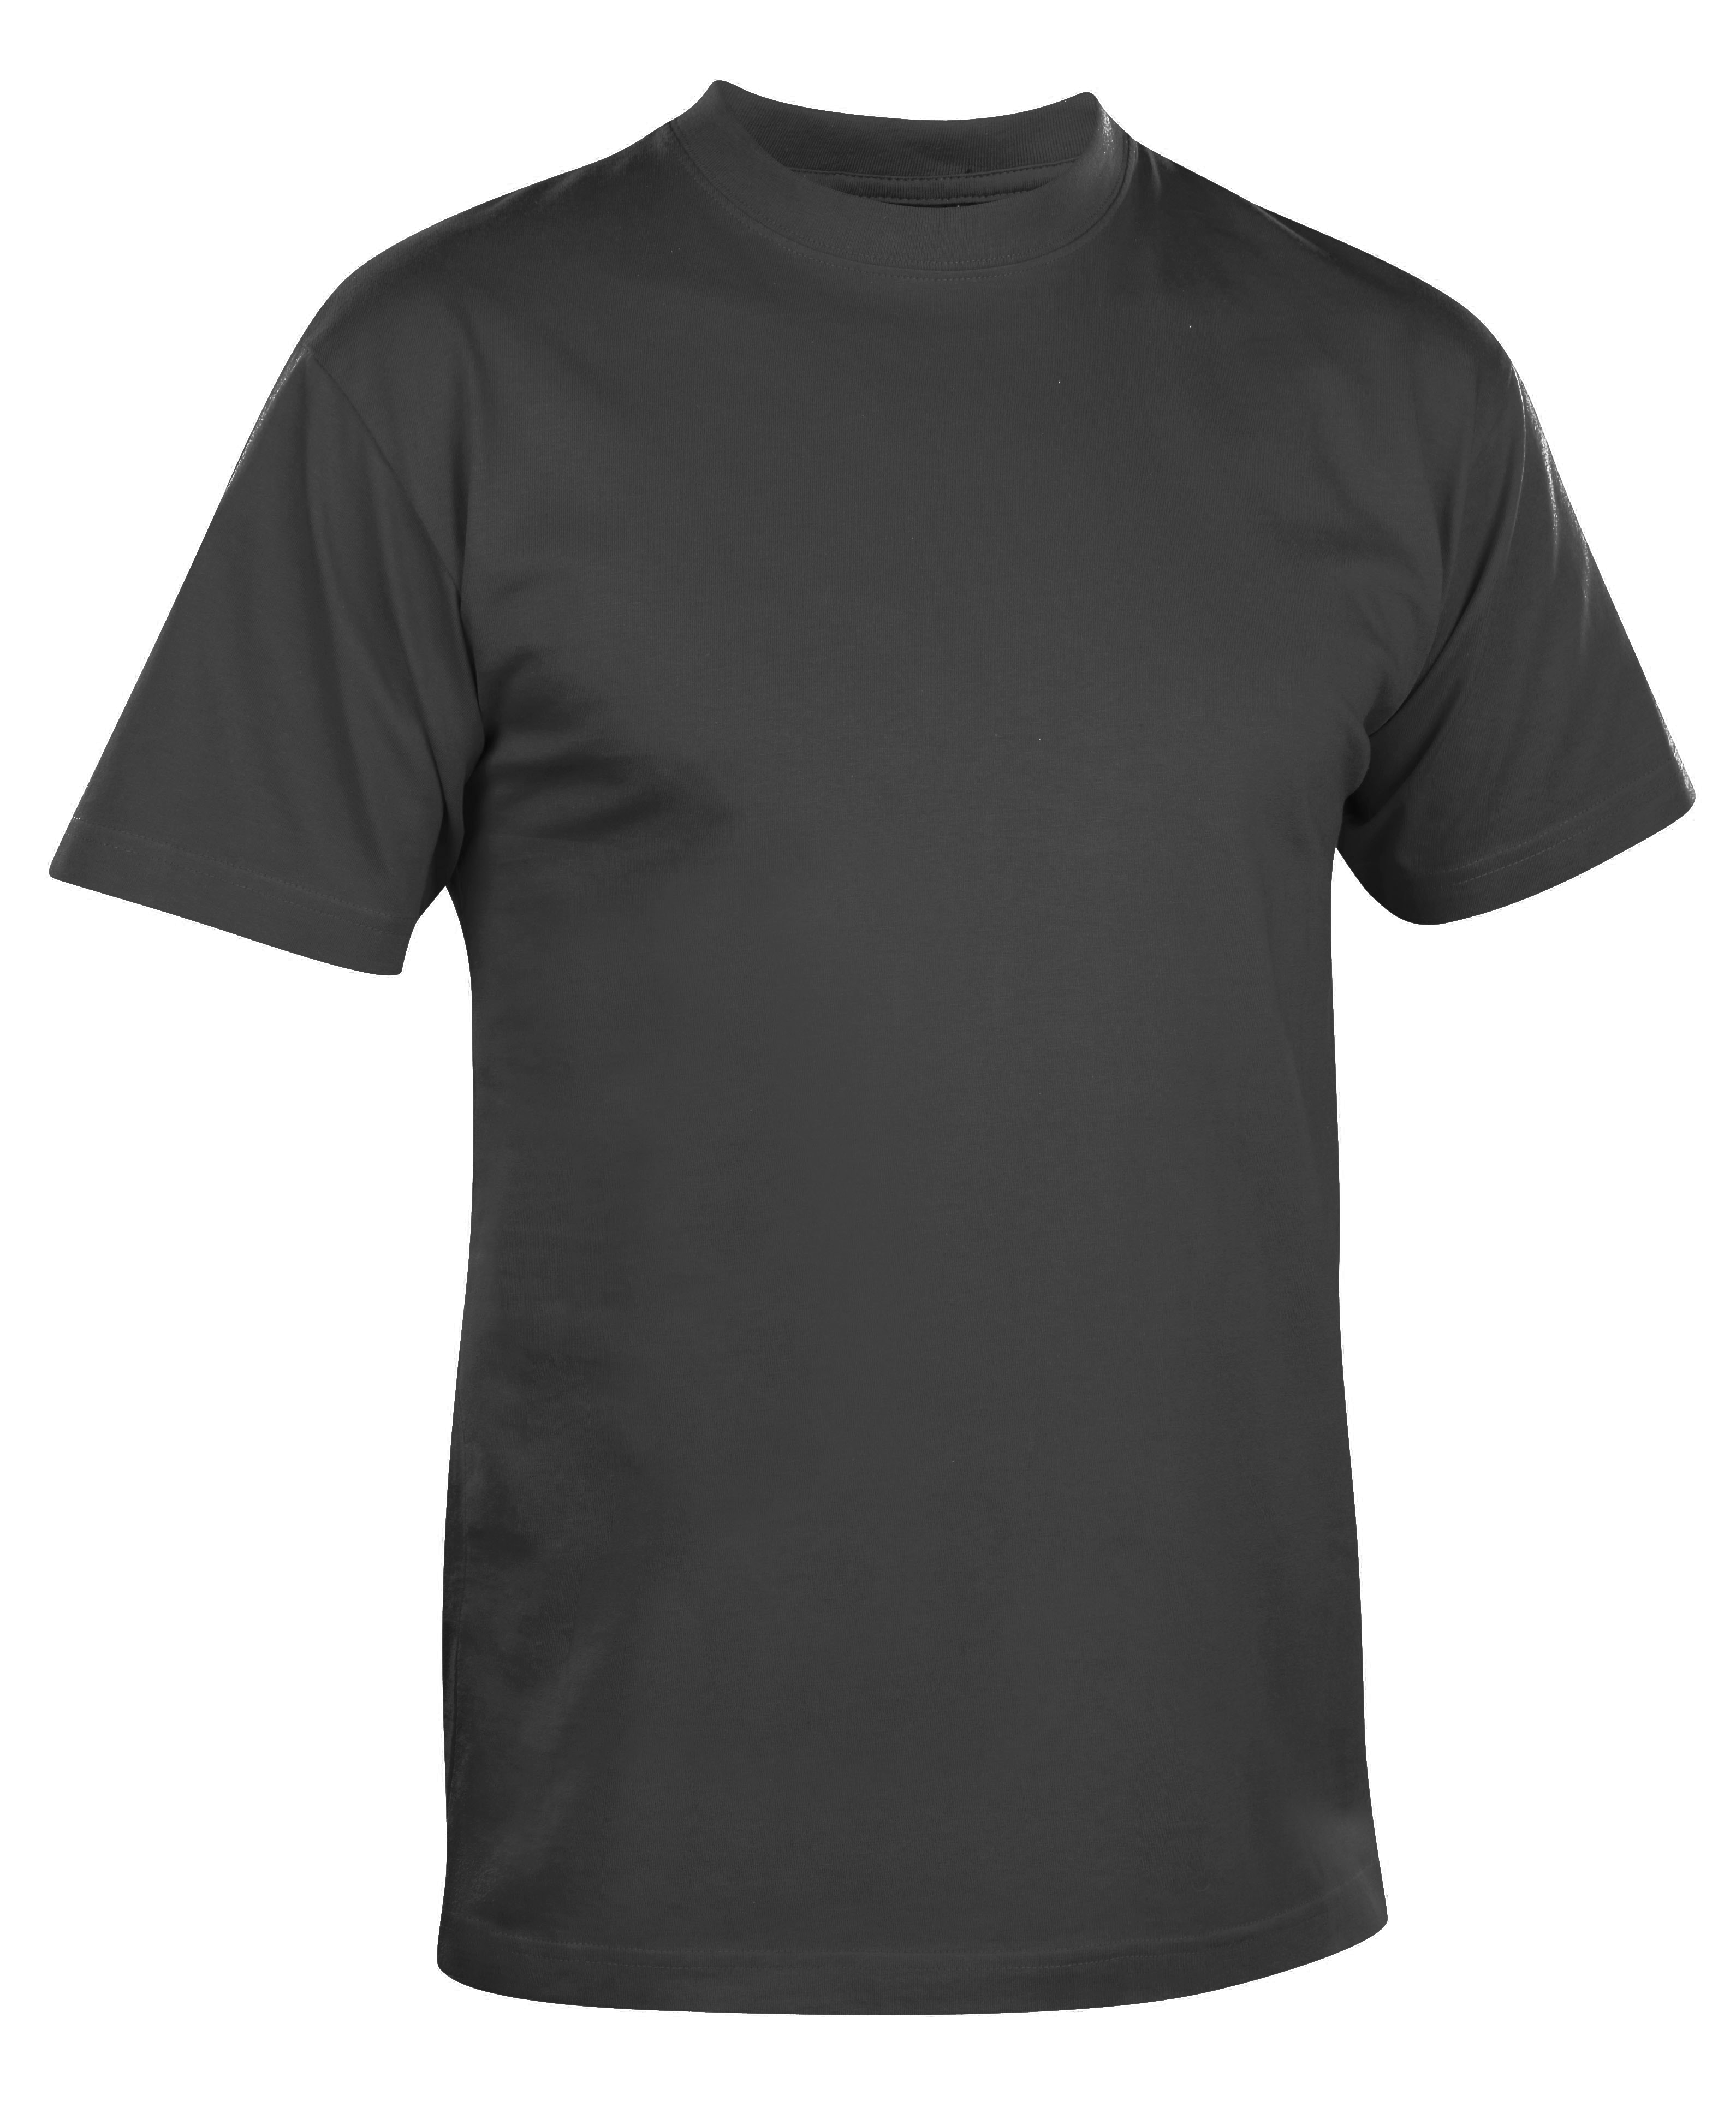 Black T-Shirt PNG Image